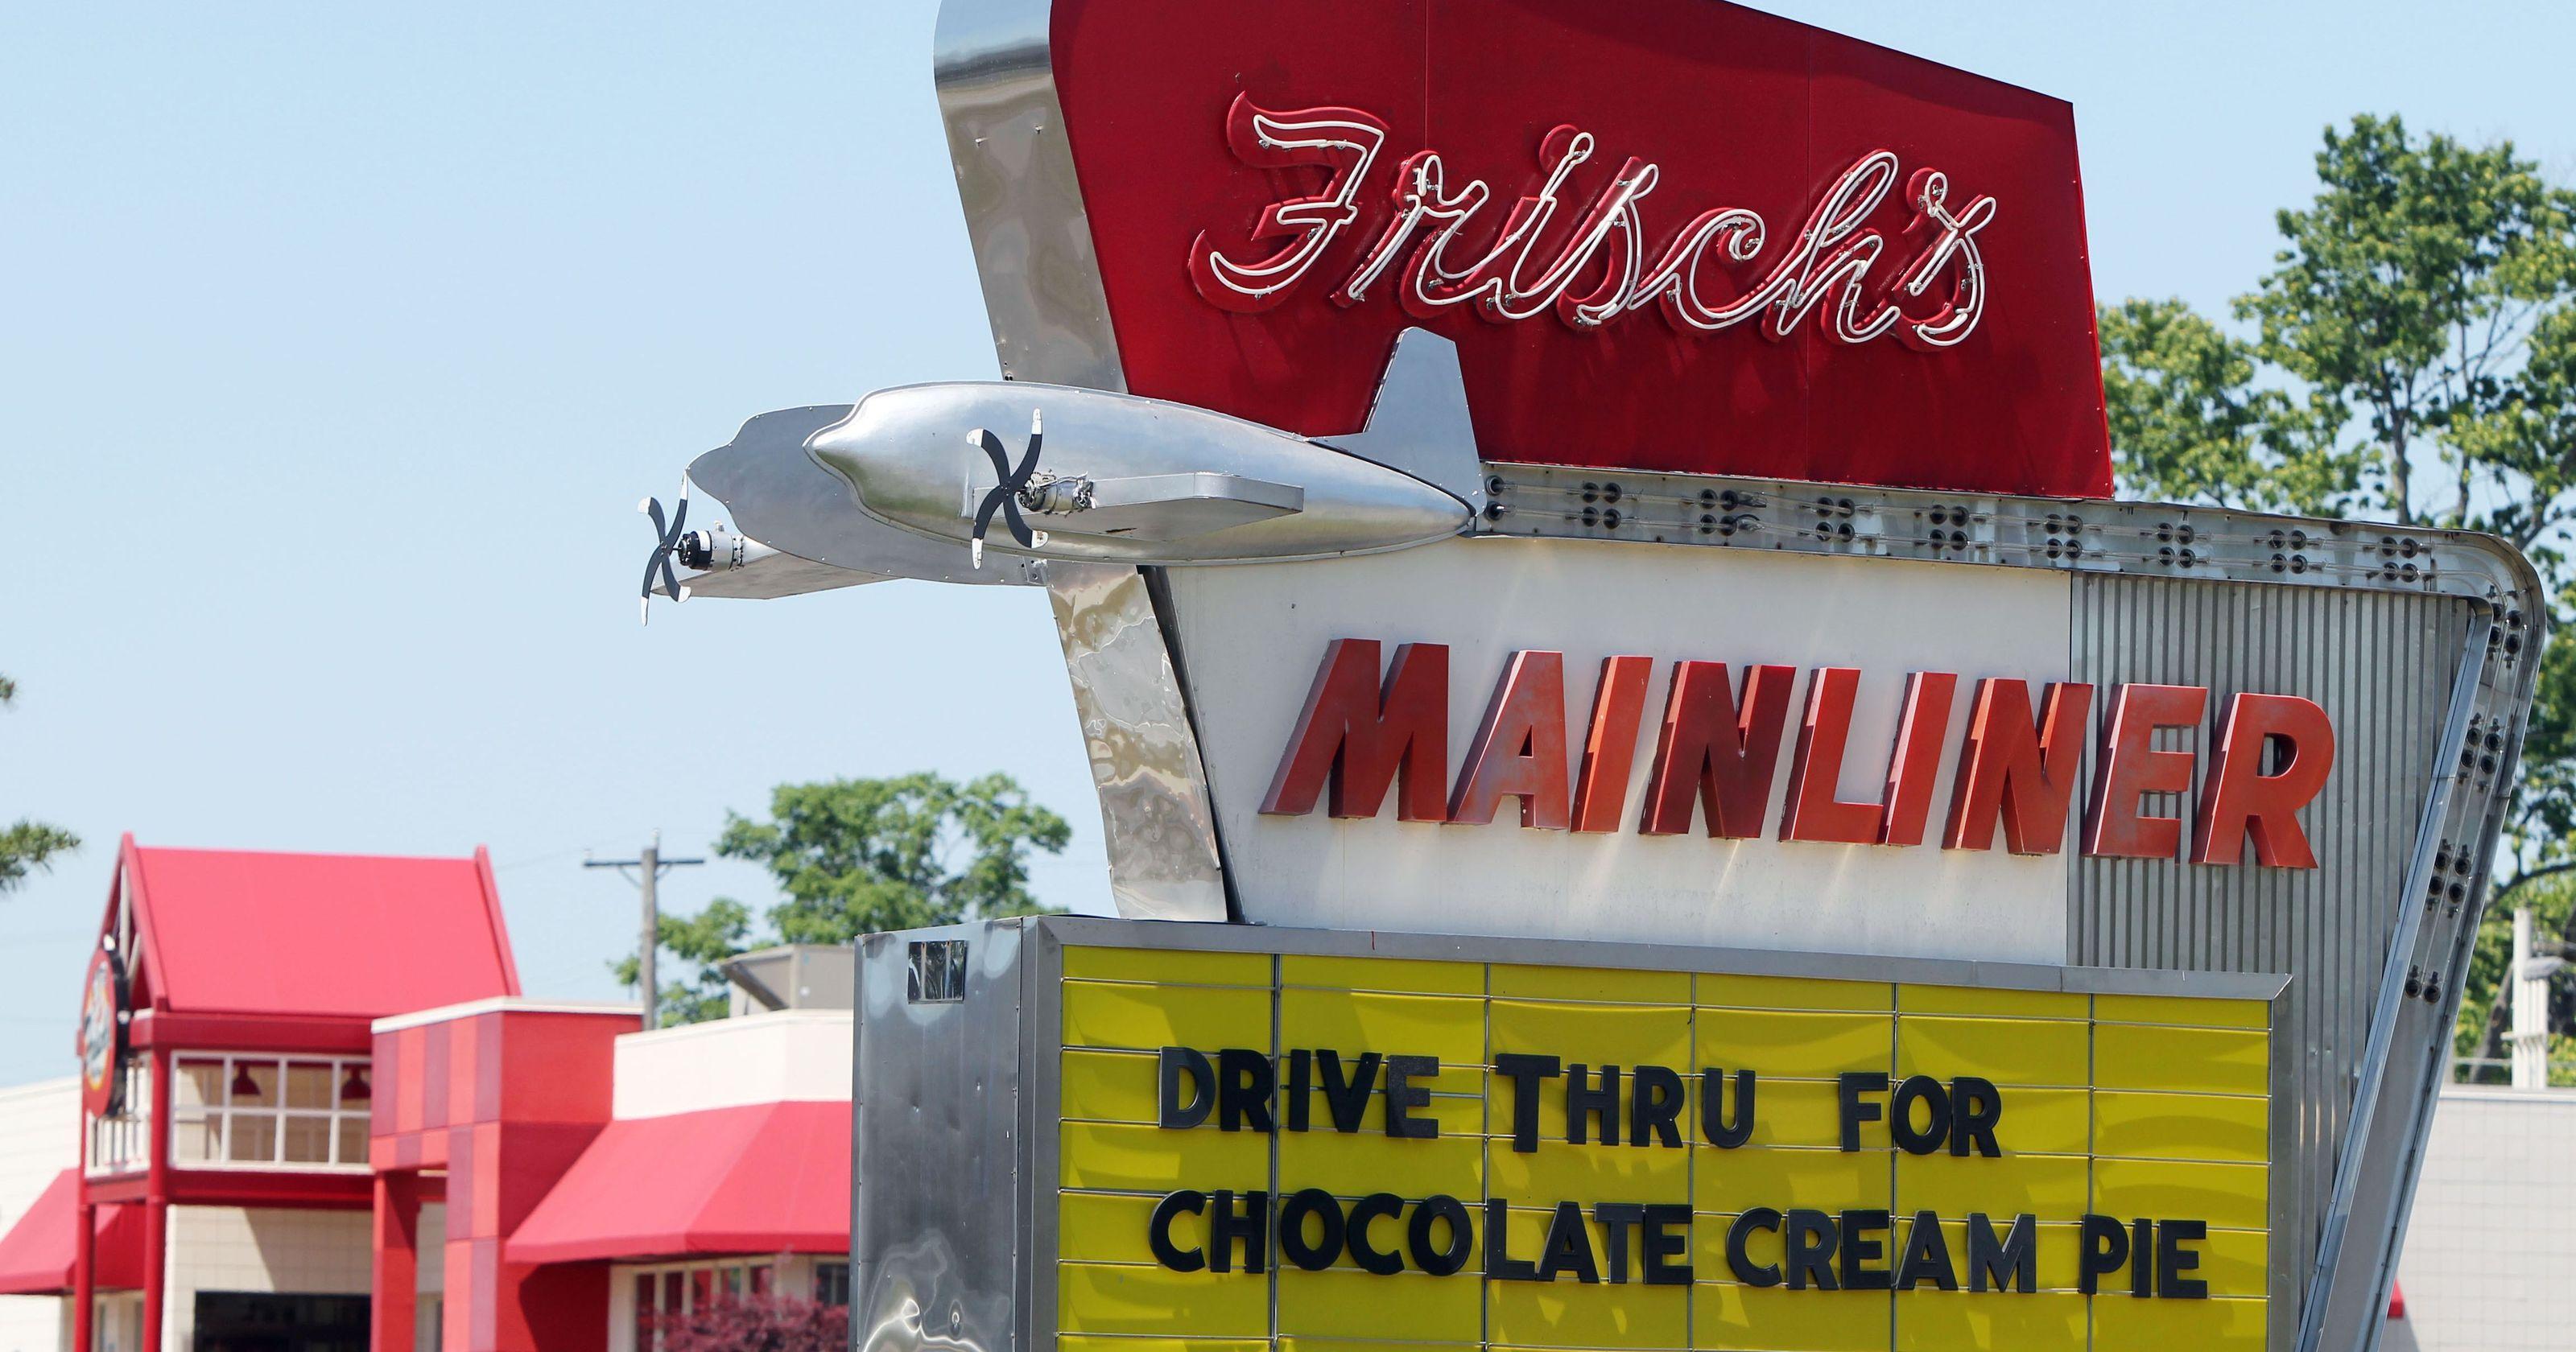 Freshes Restaurant Logo - Frisch's Big Boy unveils museum, remodeled original Mainliner